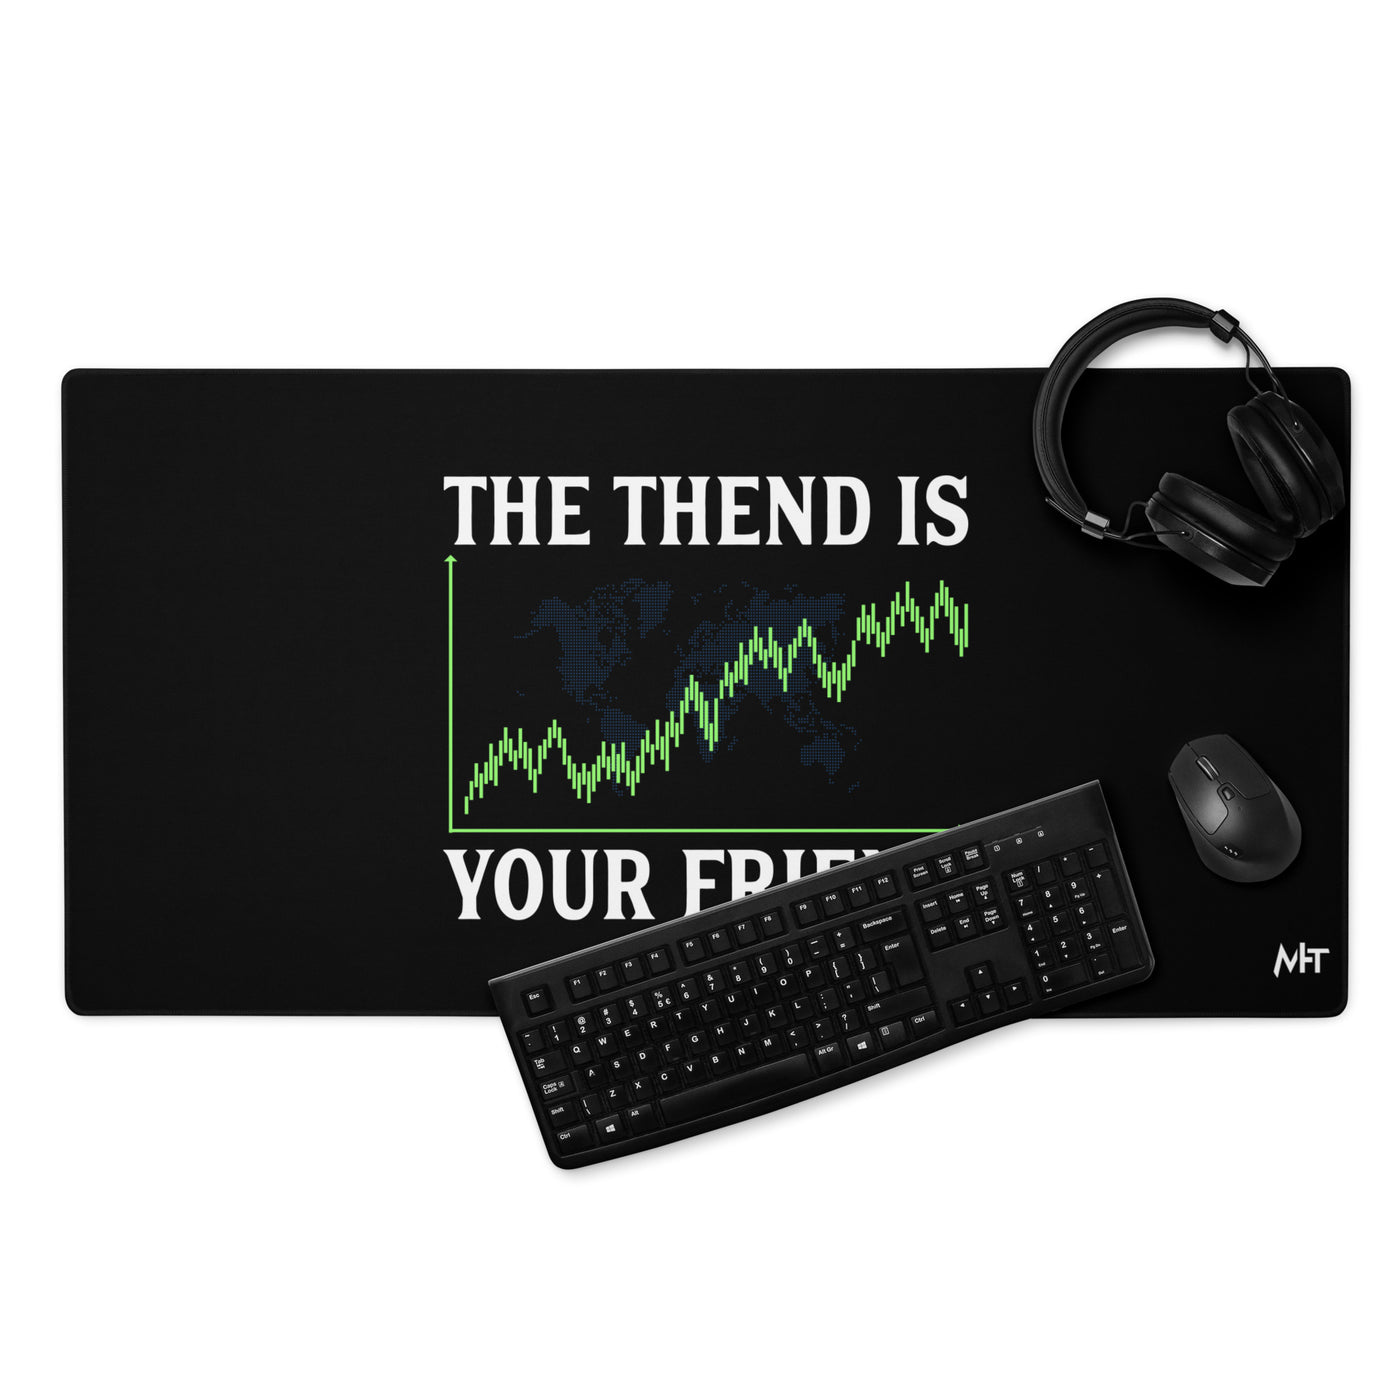 The Trend is your friend - Desk Mat